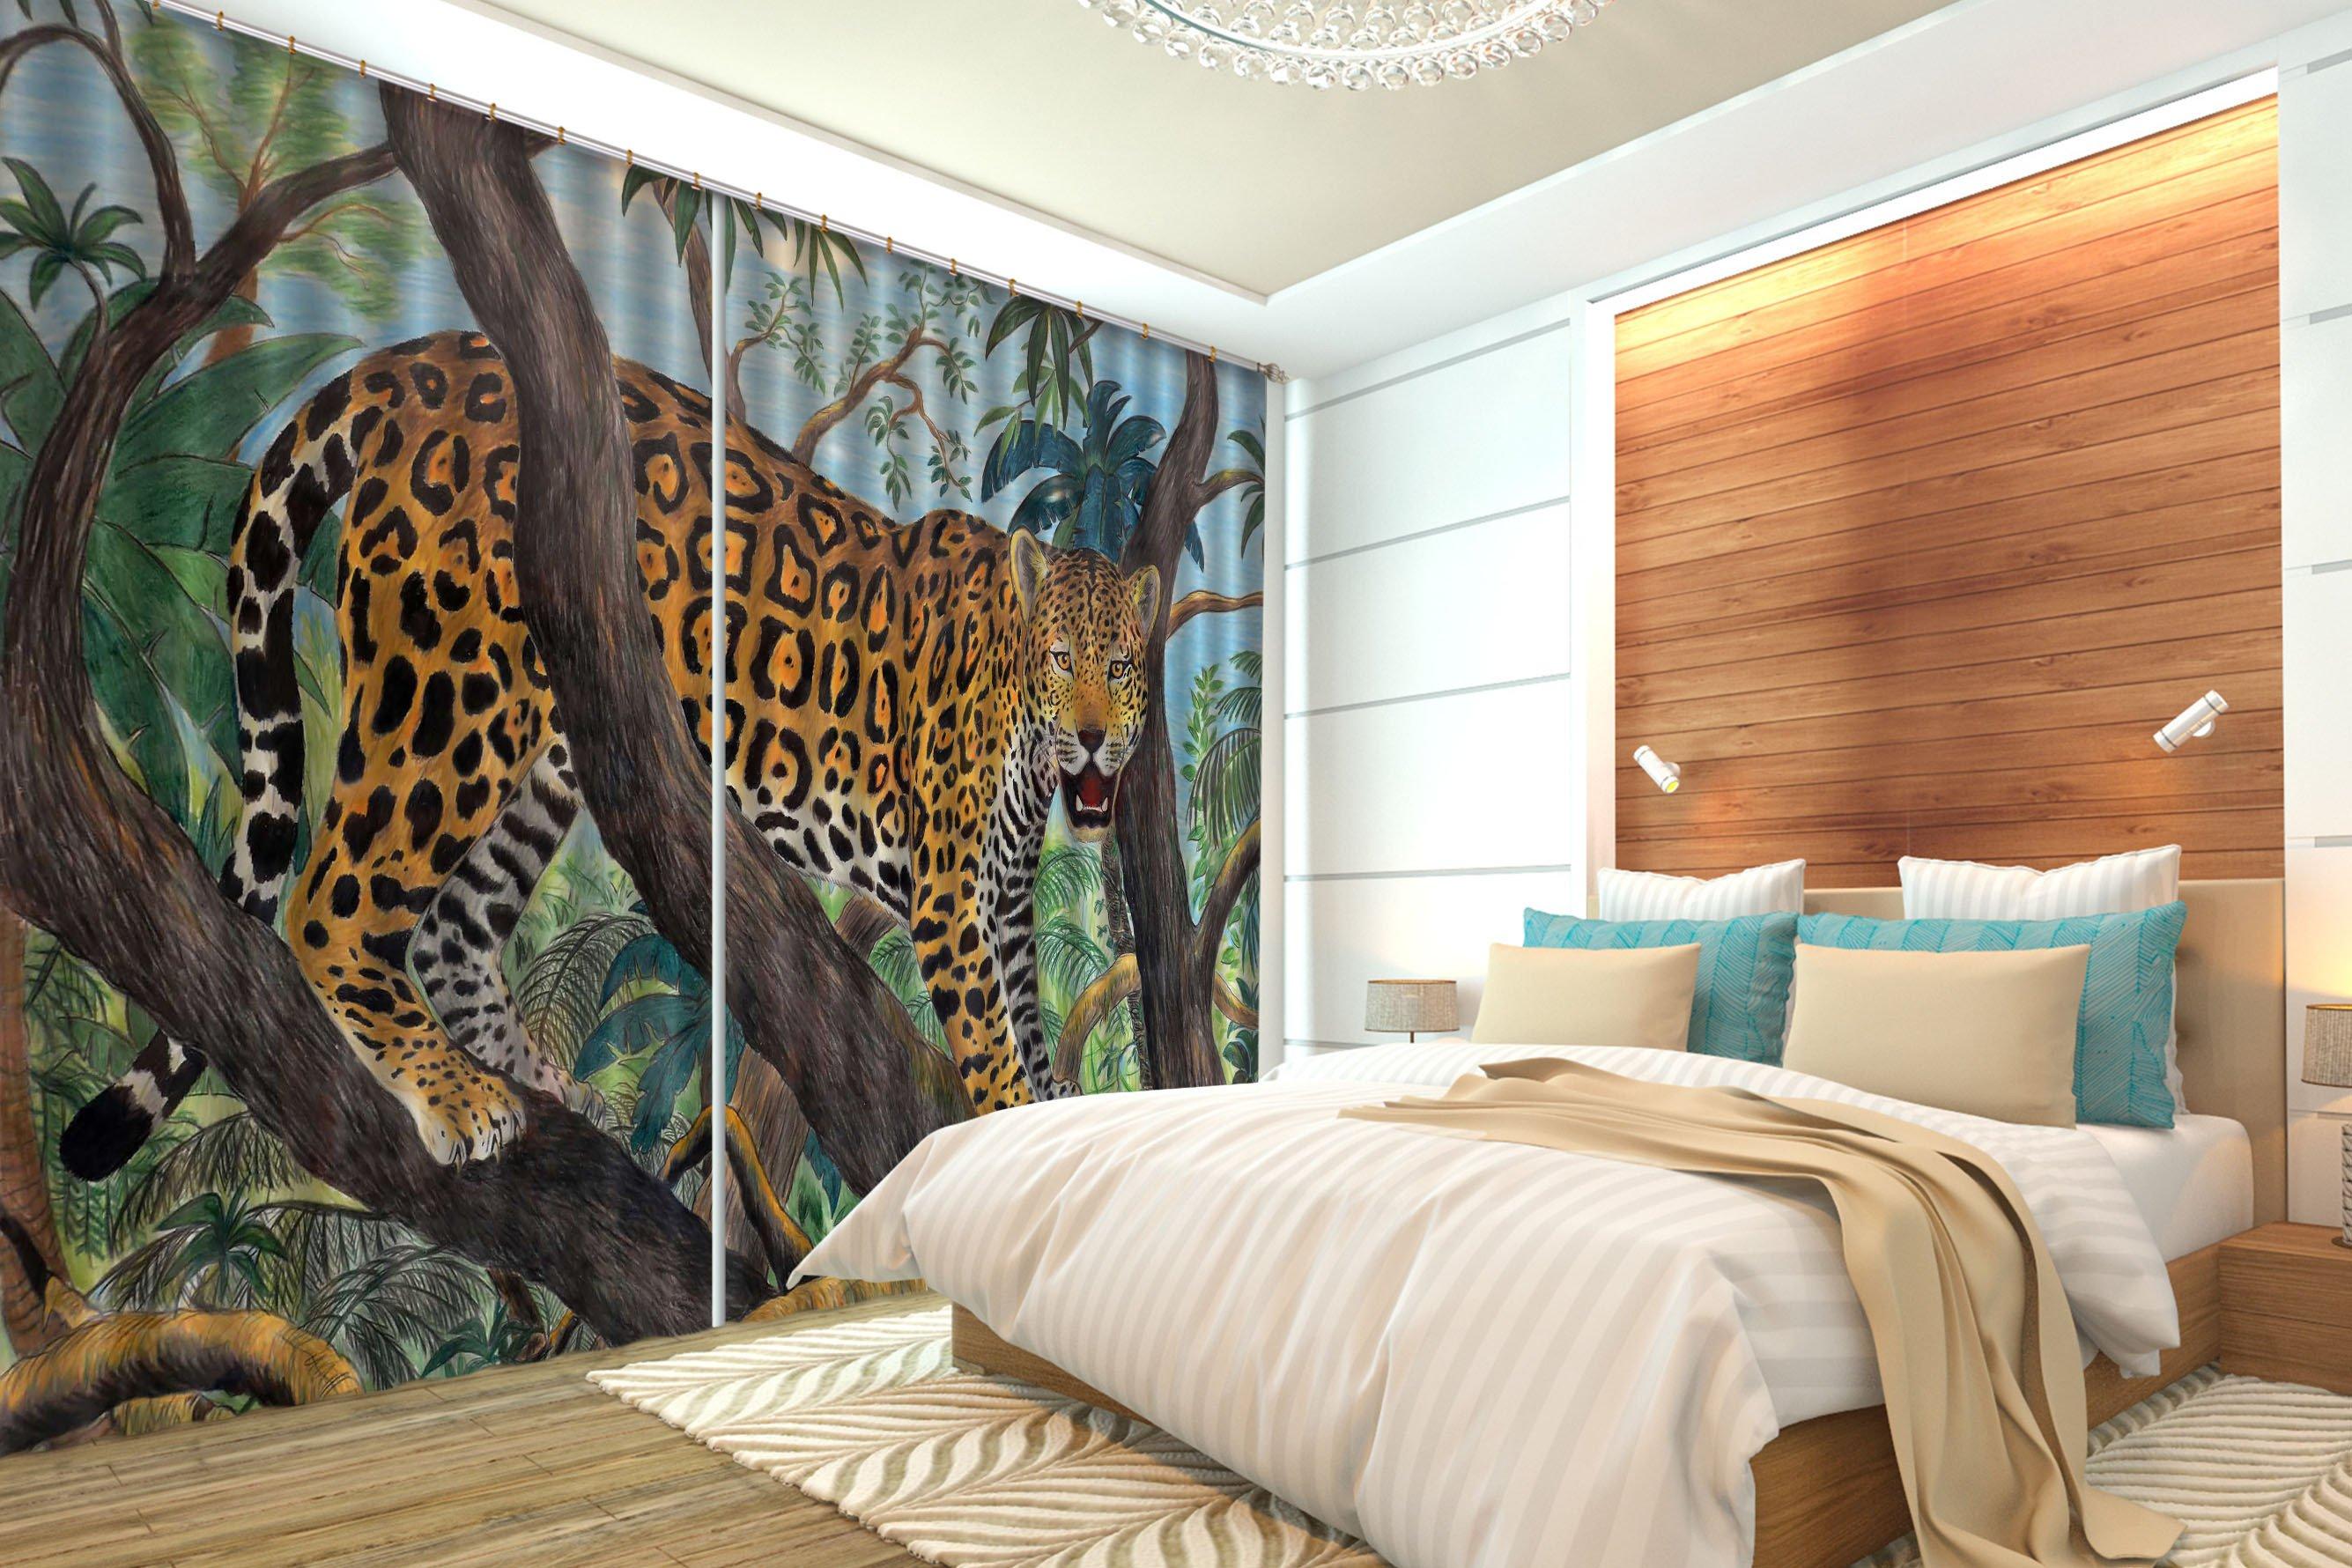 3D Tree Leopard 660 Curtains Drapes Wallpaper AJ Wallpaper 